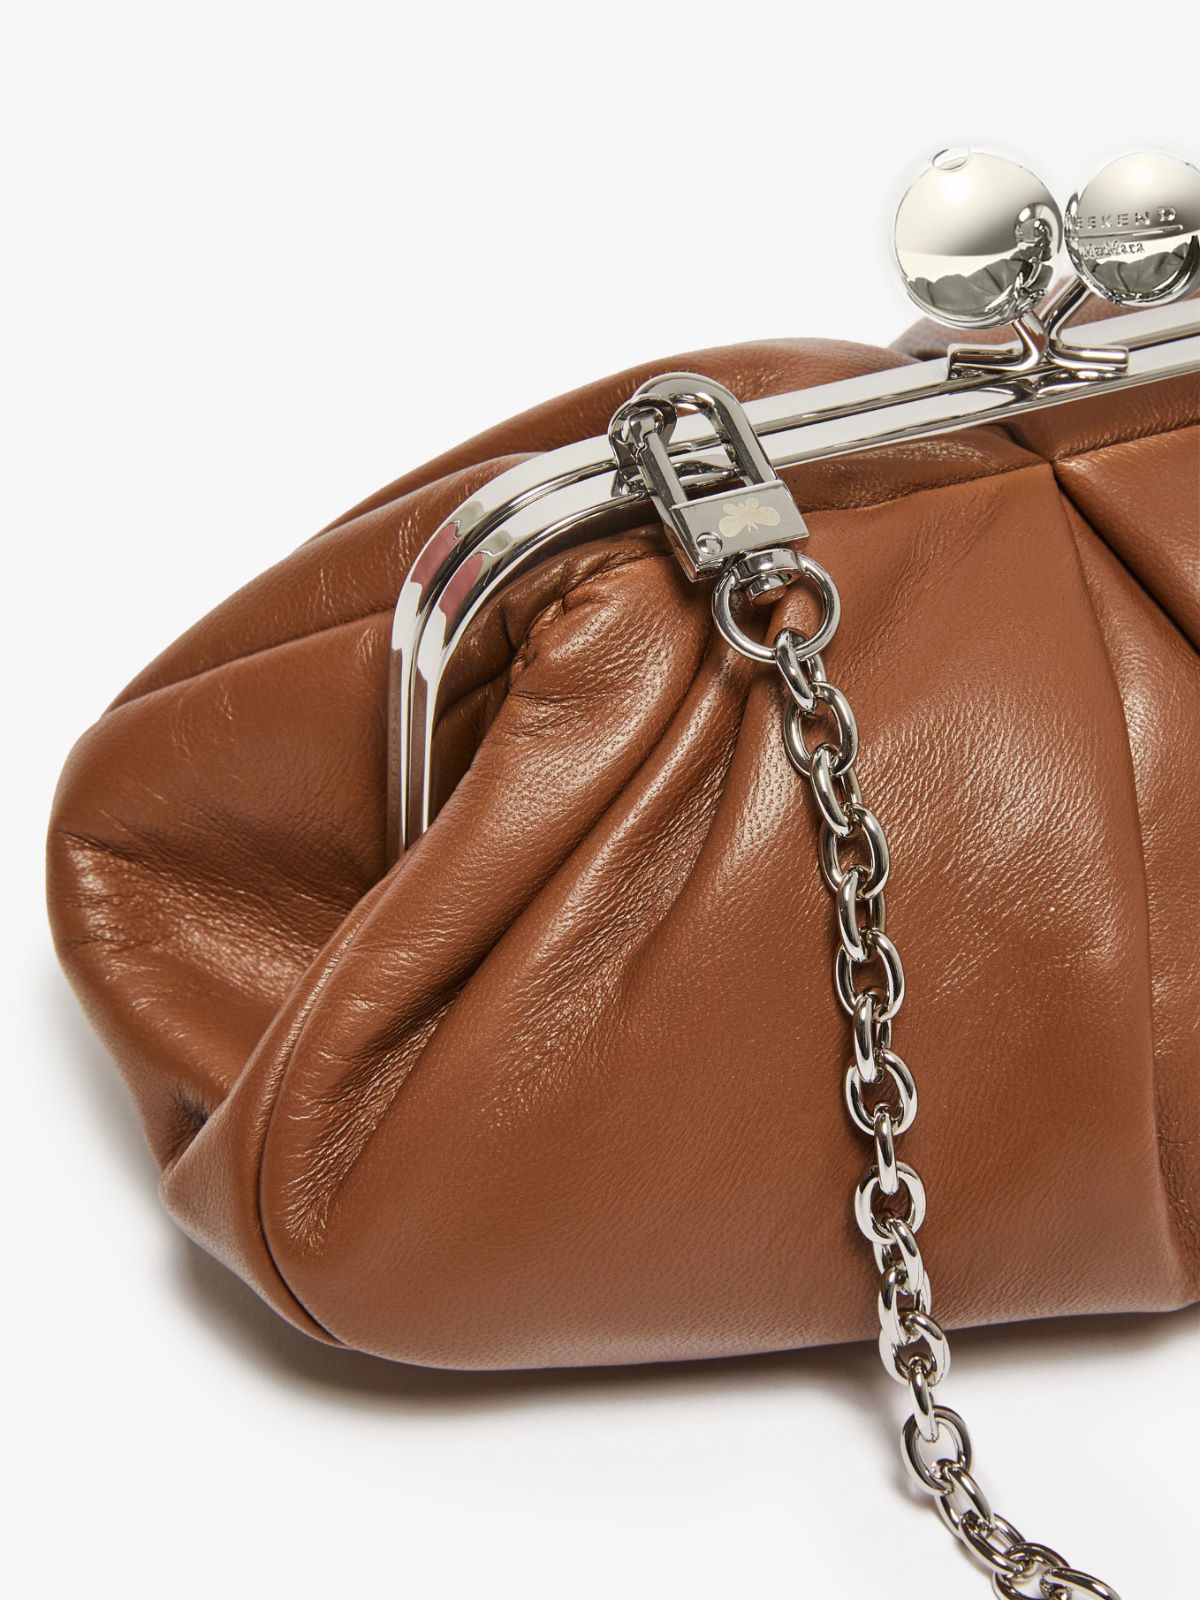 Small Pasticcino Bag in nappa leather - TOBACCO - Weekend Max Mara - 4